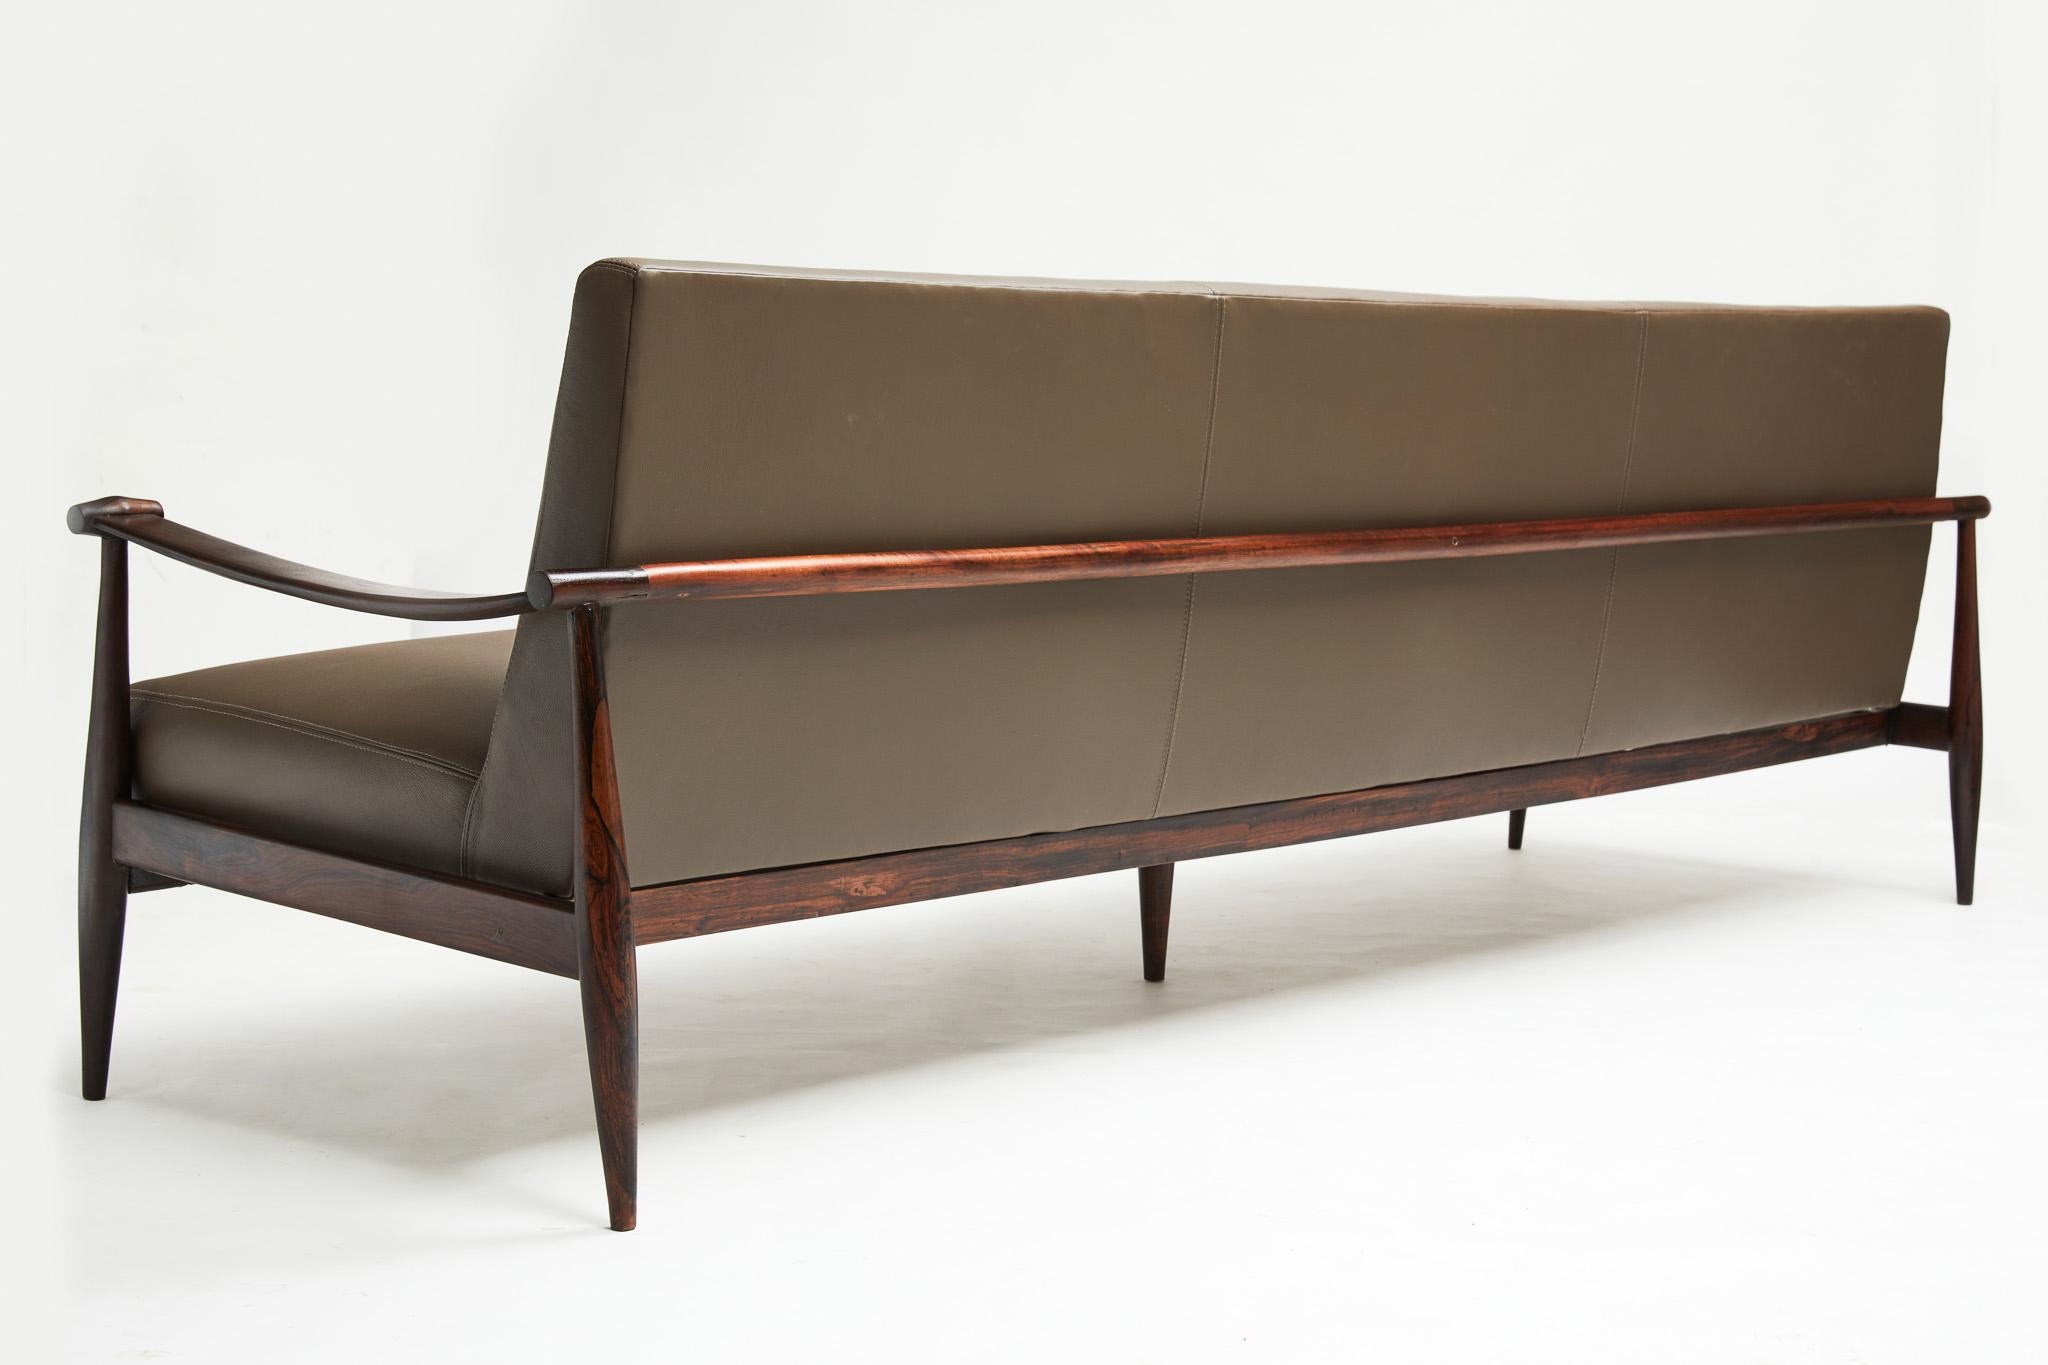 20th Century Brazilian Modern Sofa in Hardwood & Brown Leather by Liceu De Artes 1960